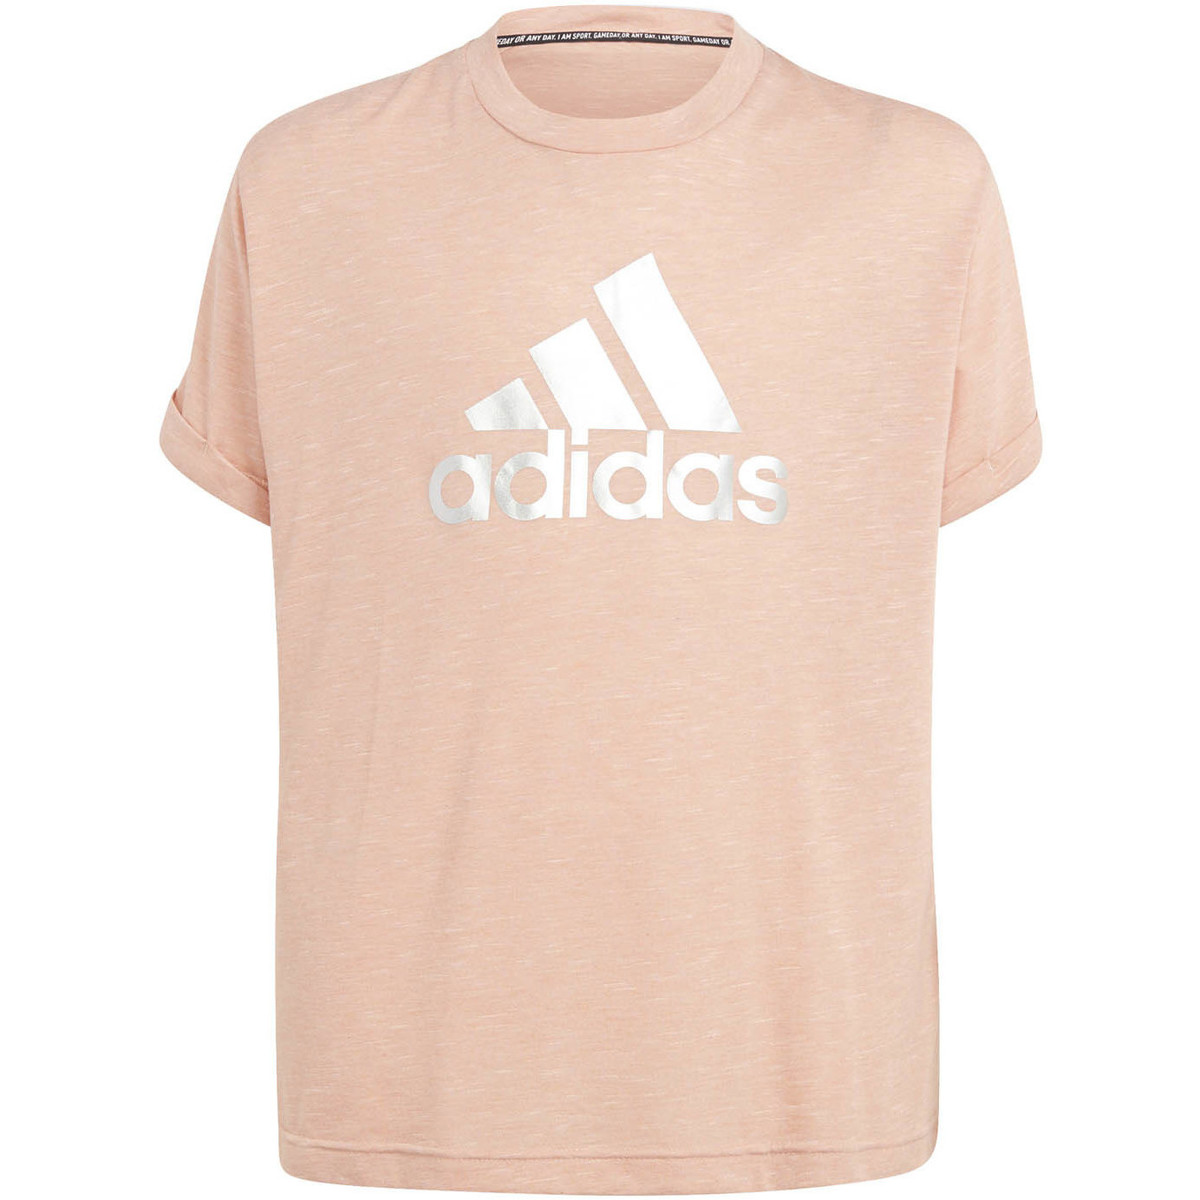 adidas Originals Rose T-shirt Badge Of Sport DIF68k8R